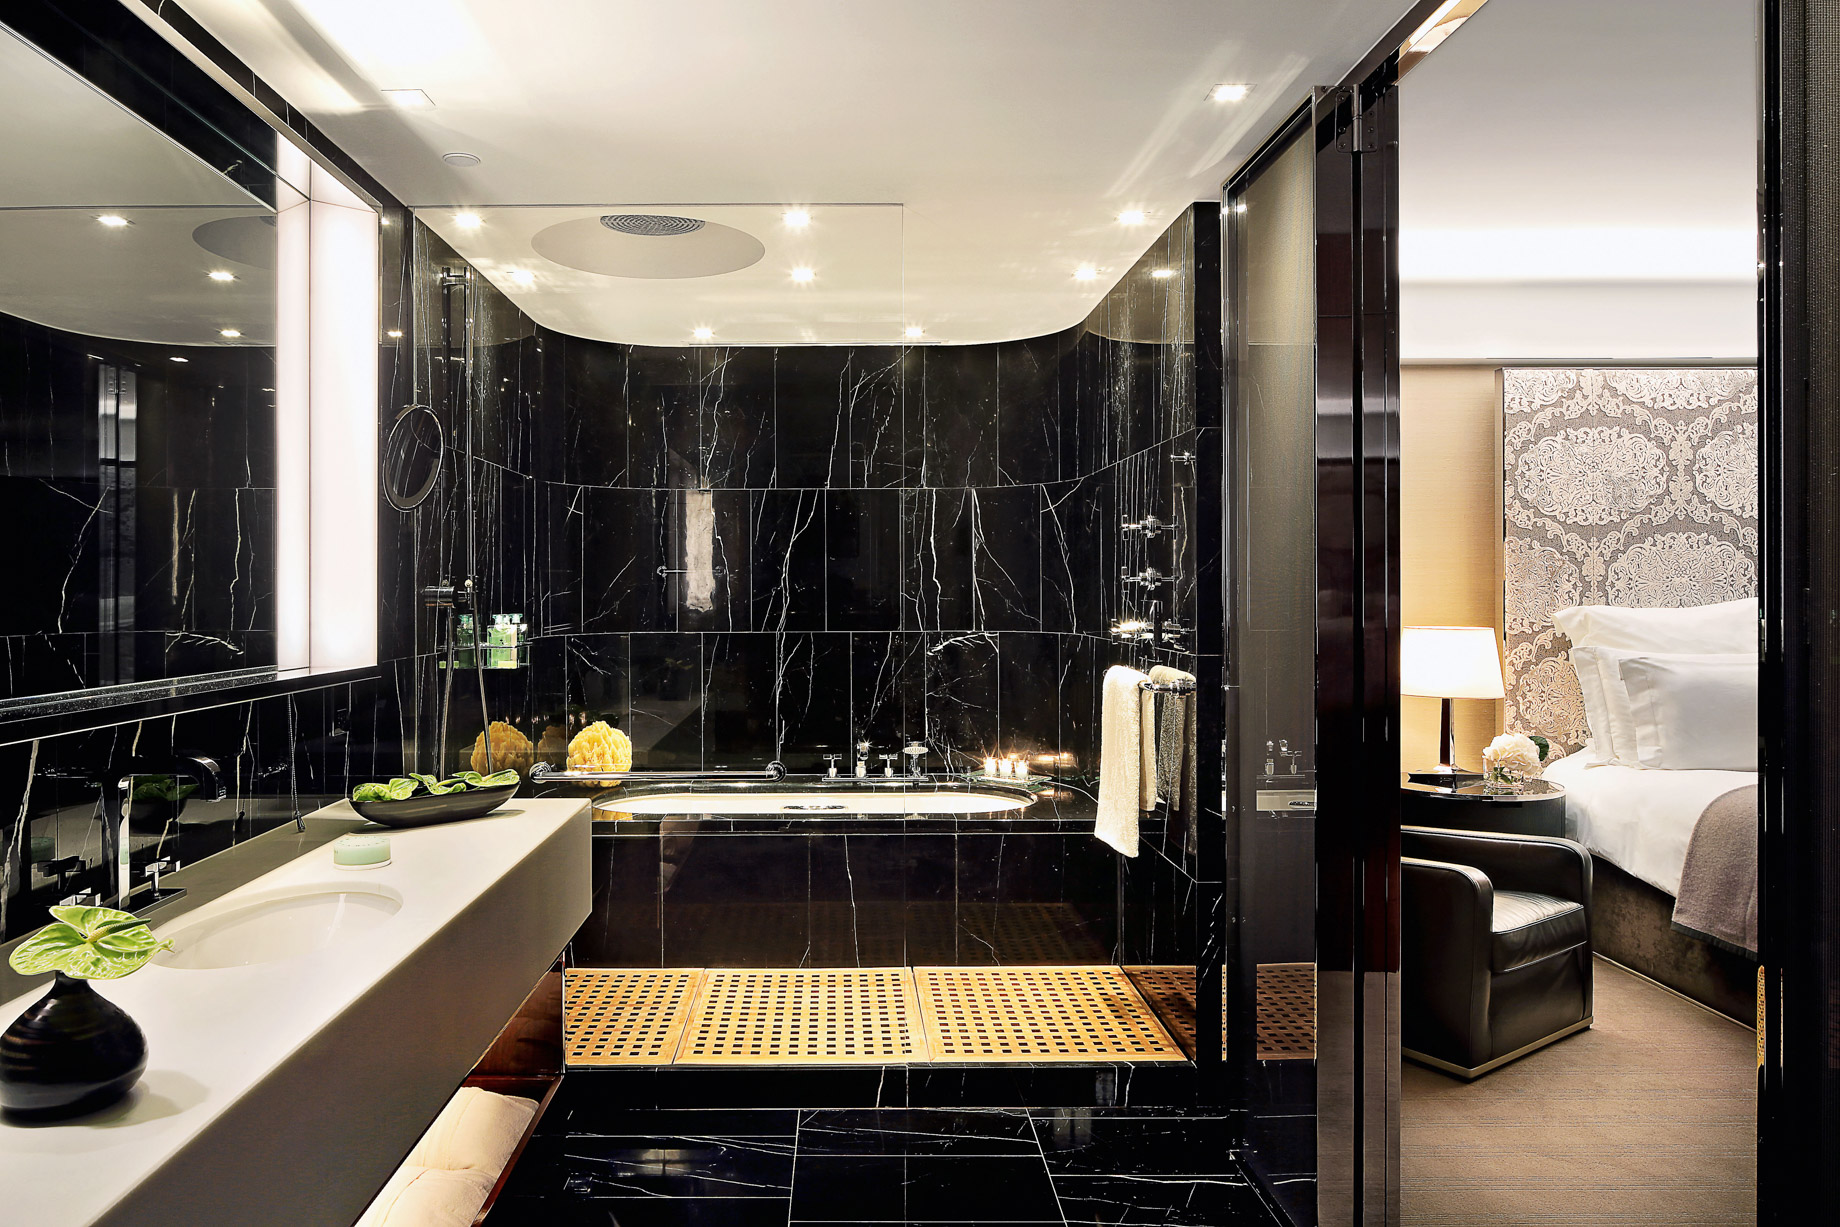 Bvlgari Hotel London – Knightsbridge, London, UK – Knightsbridge Suite Bathroom